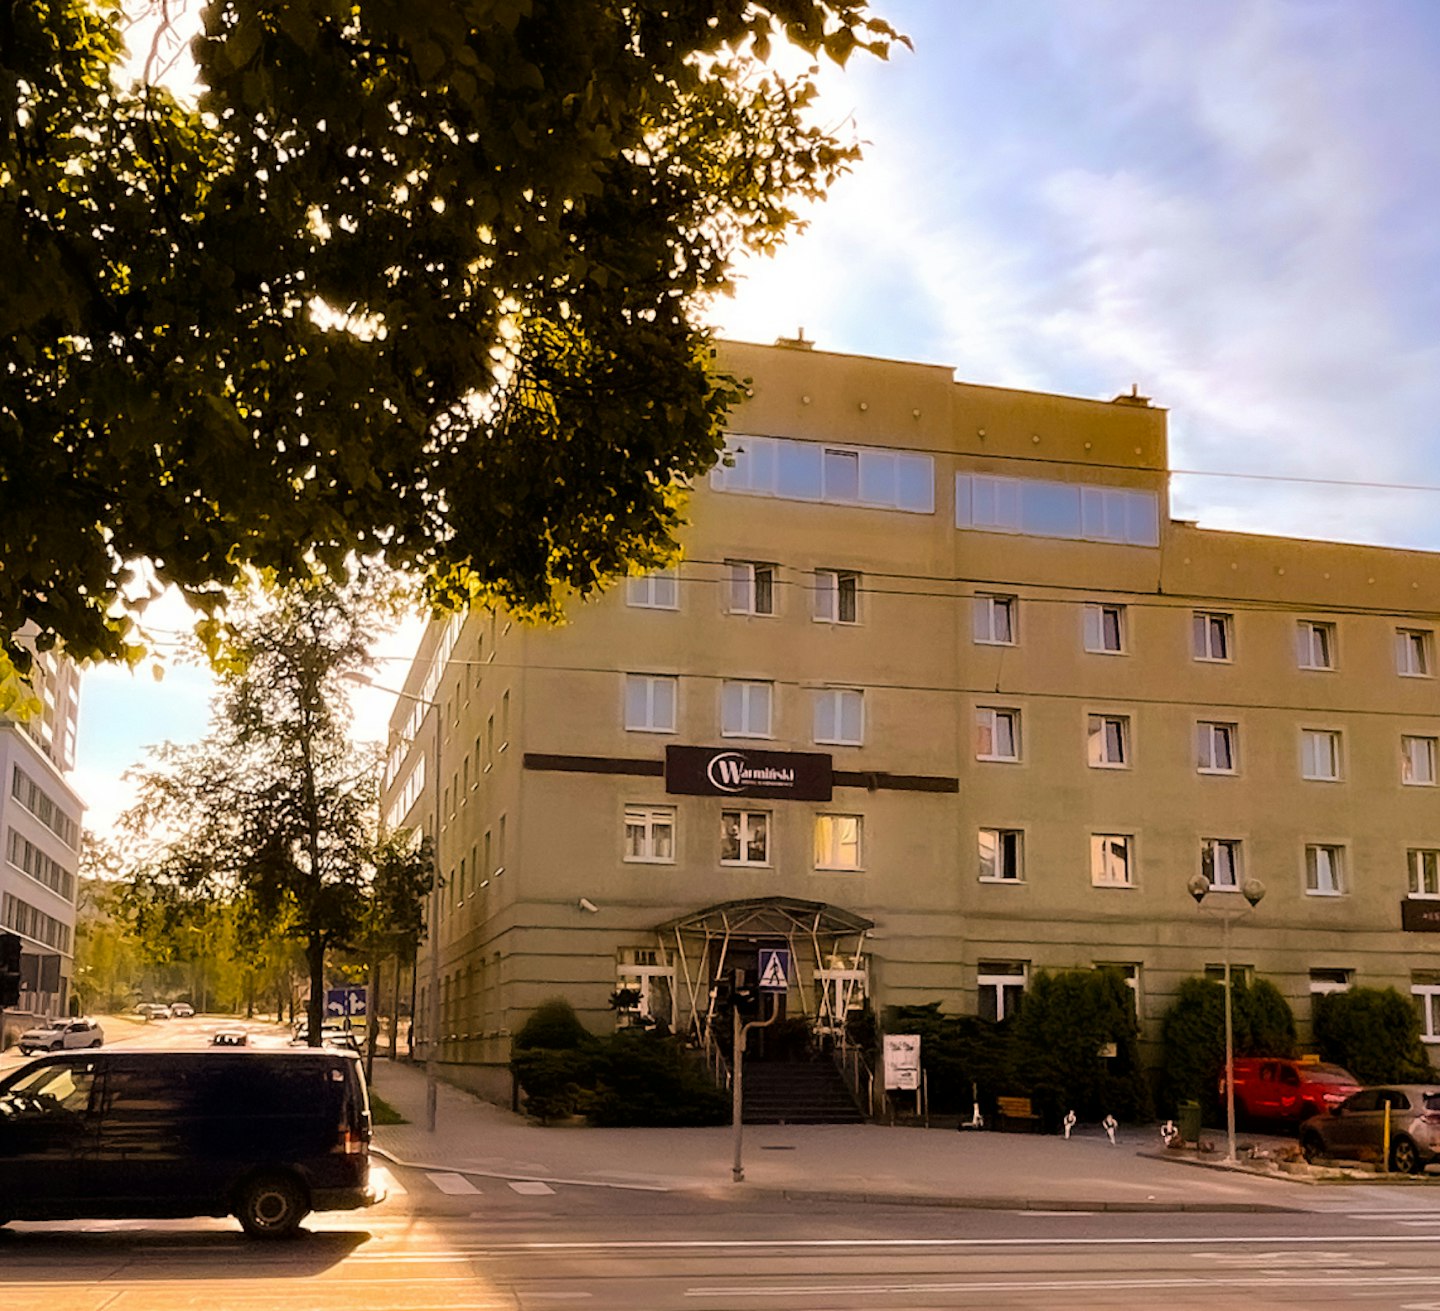 Warmiński Hotel & Conference - Olsztyn